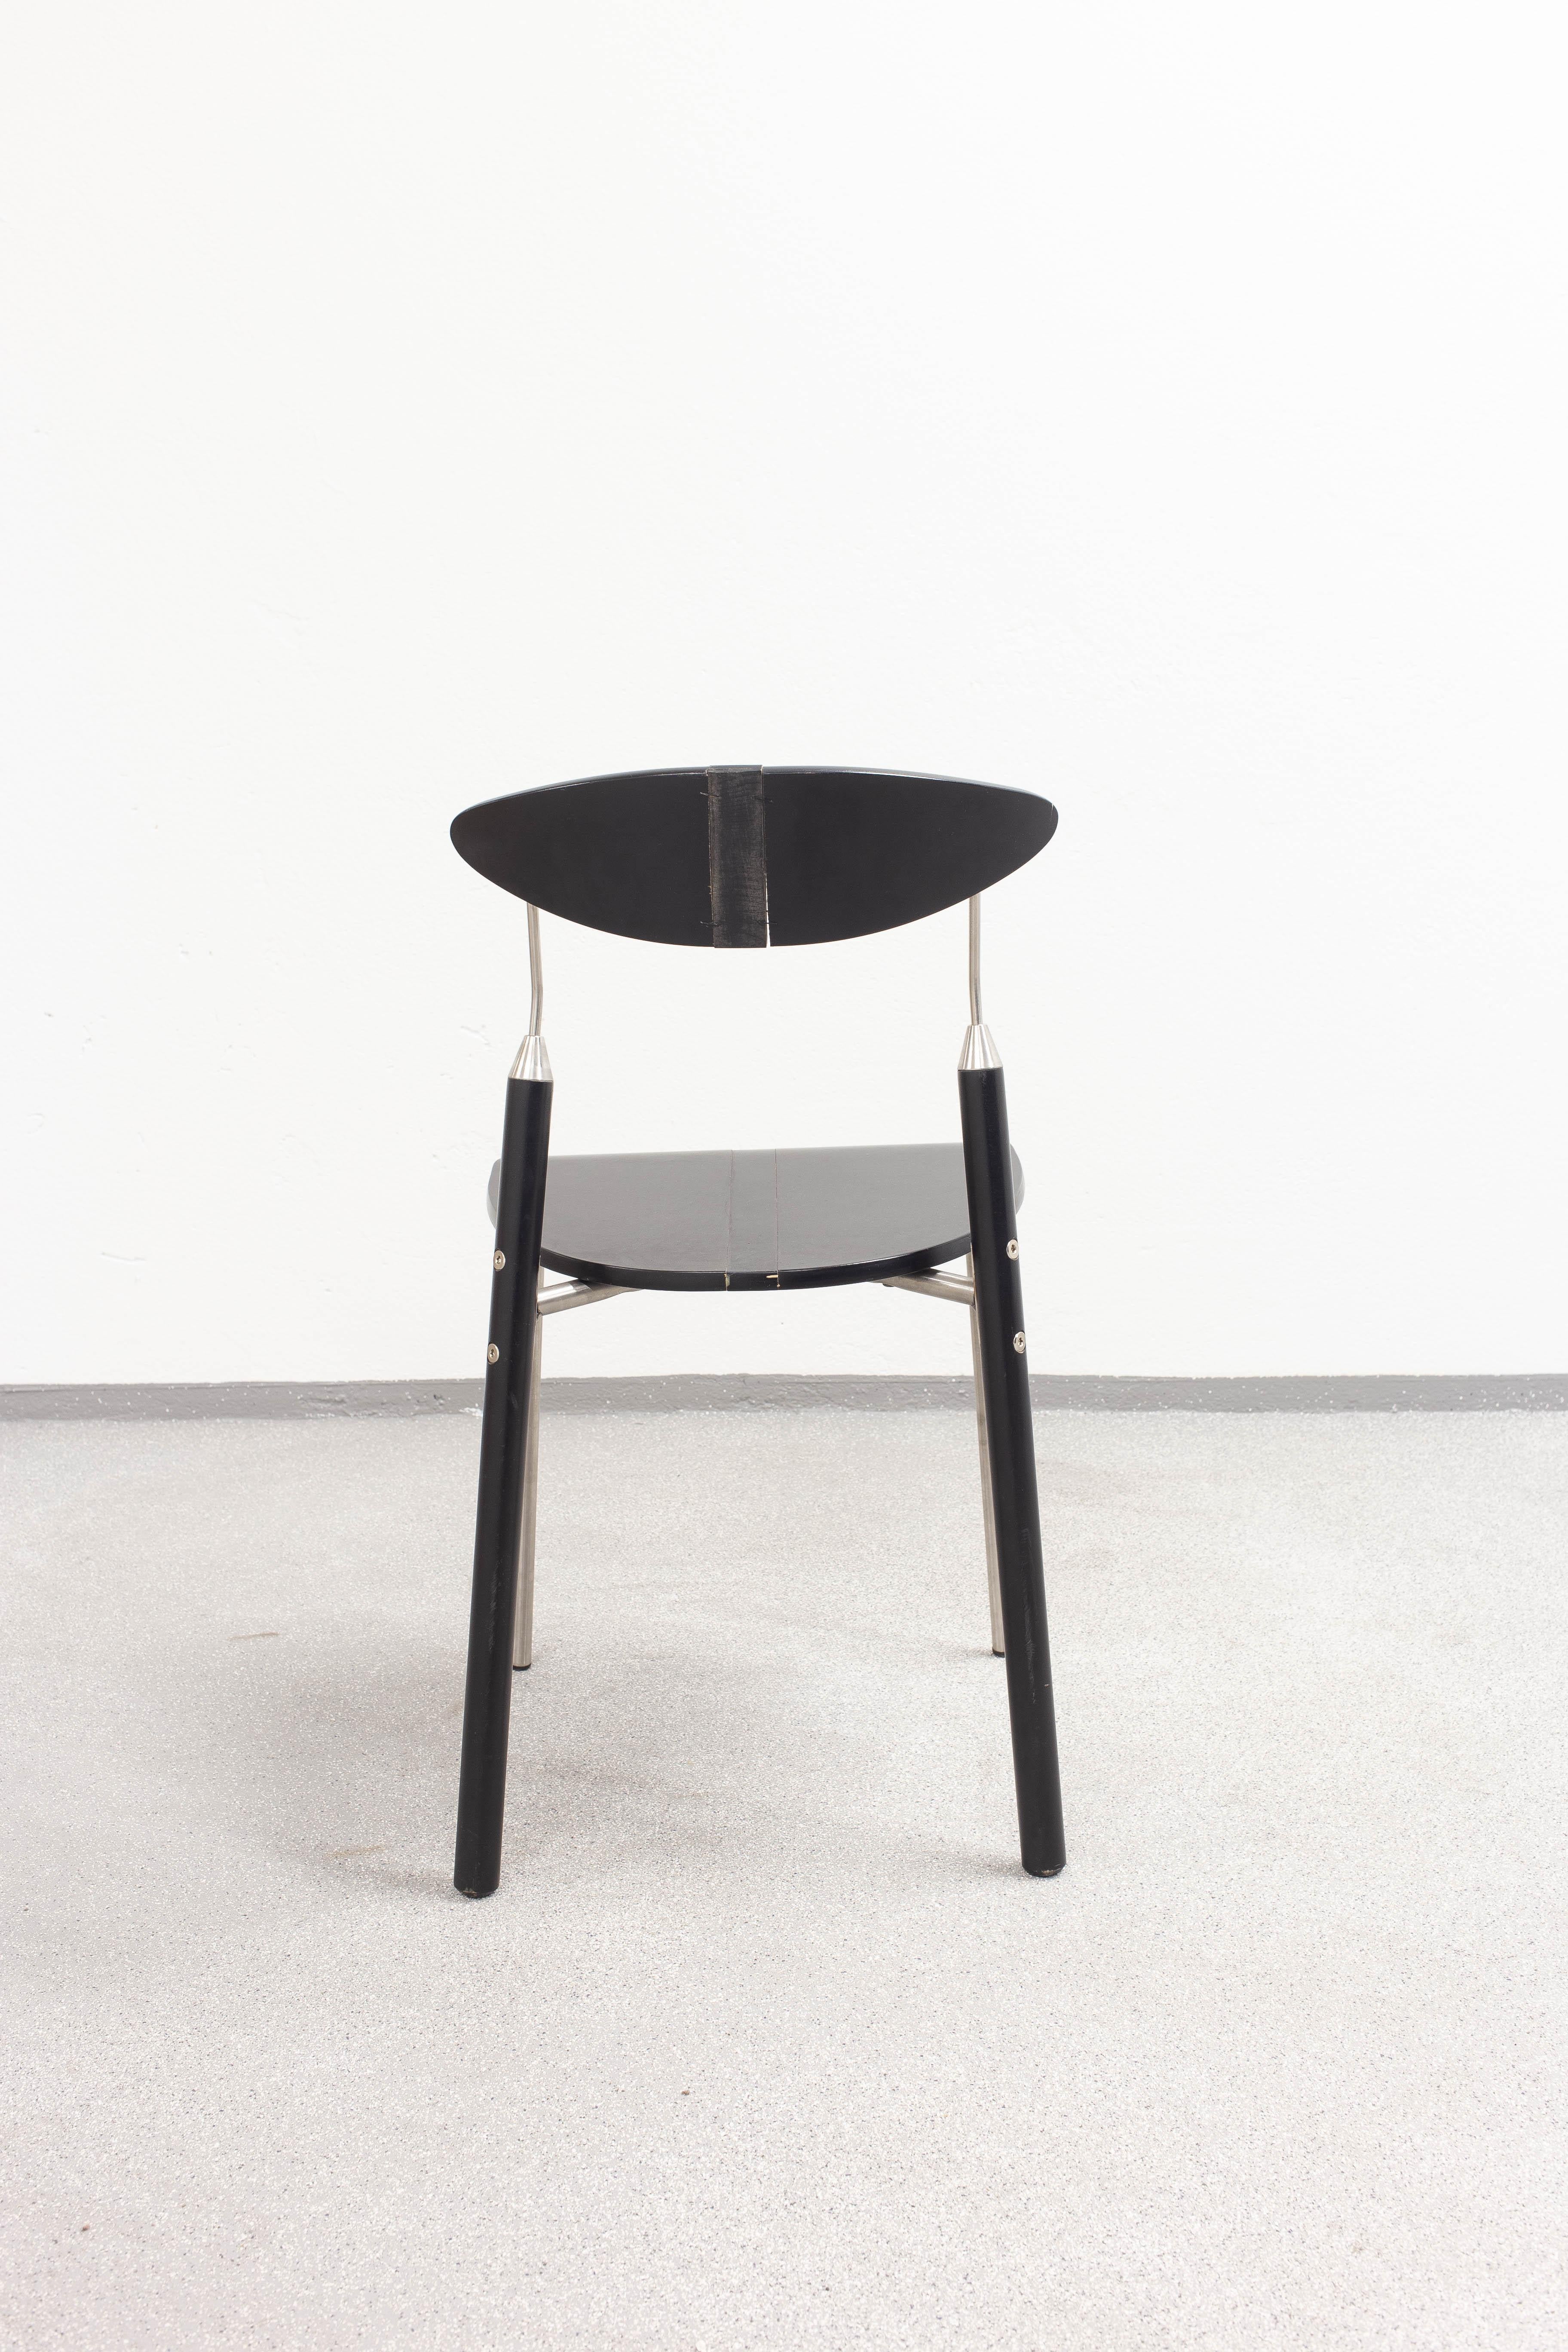 Mid-20th Century Midcentury Scandinavian Chair, Probably Sørlie Møbelfabrikk Workshop Prototype For Sale